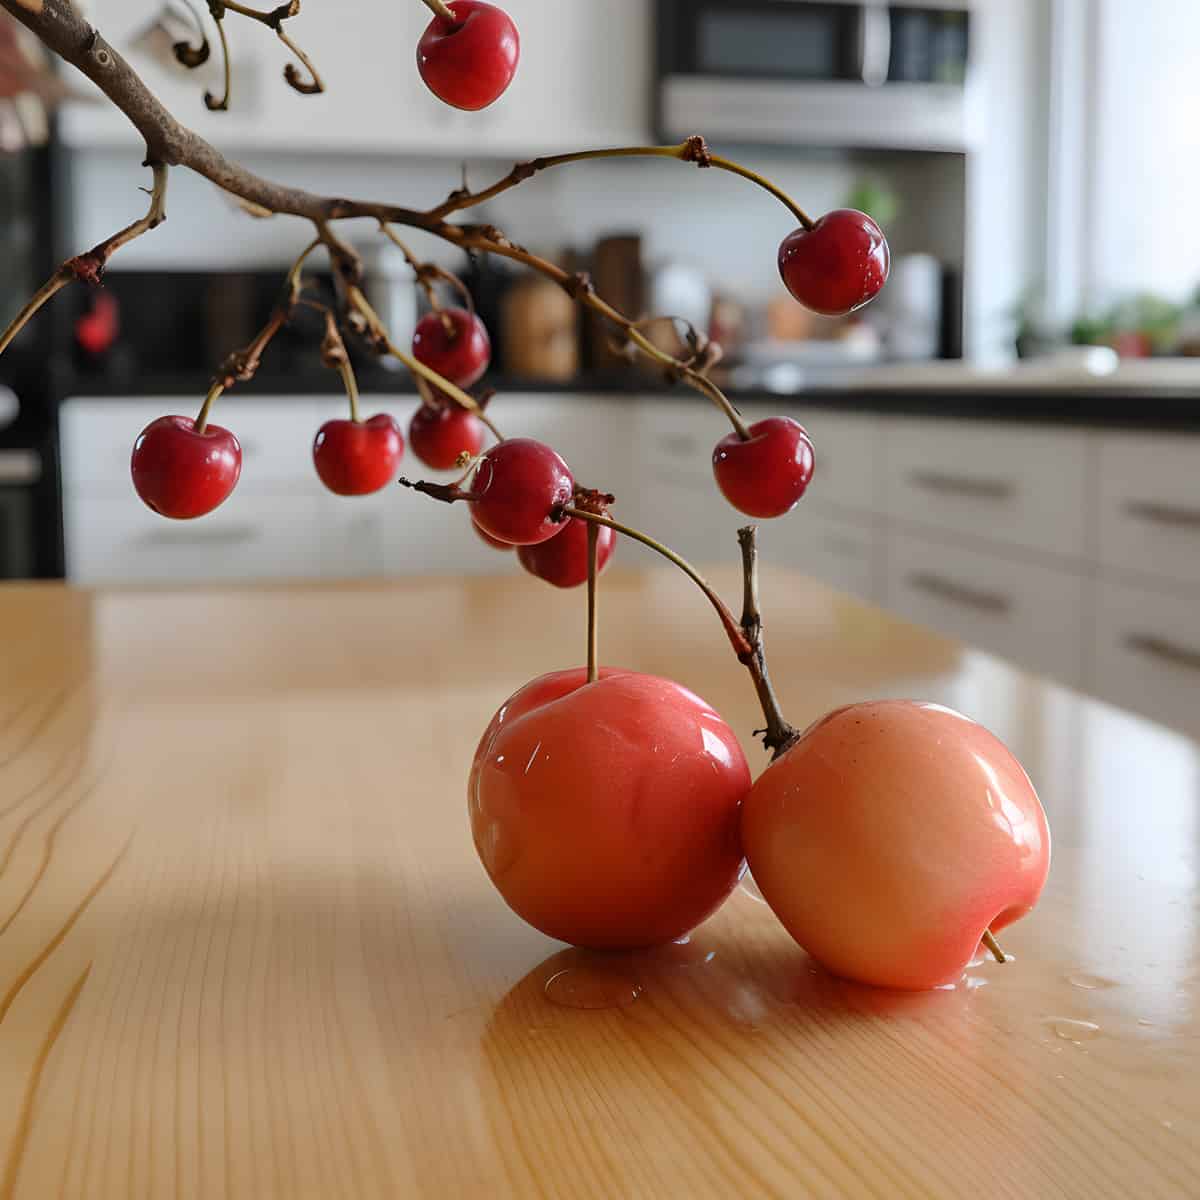 Kaido Crab Apple on a kitchen counter